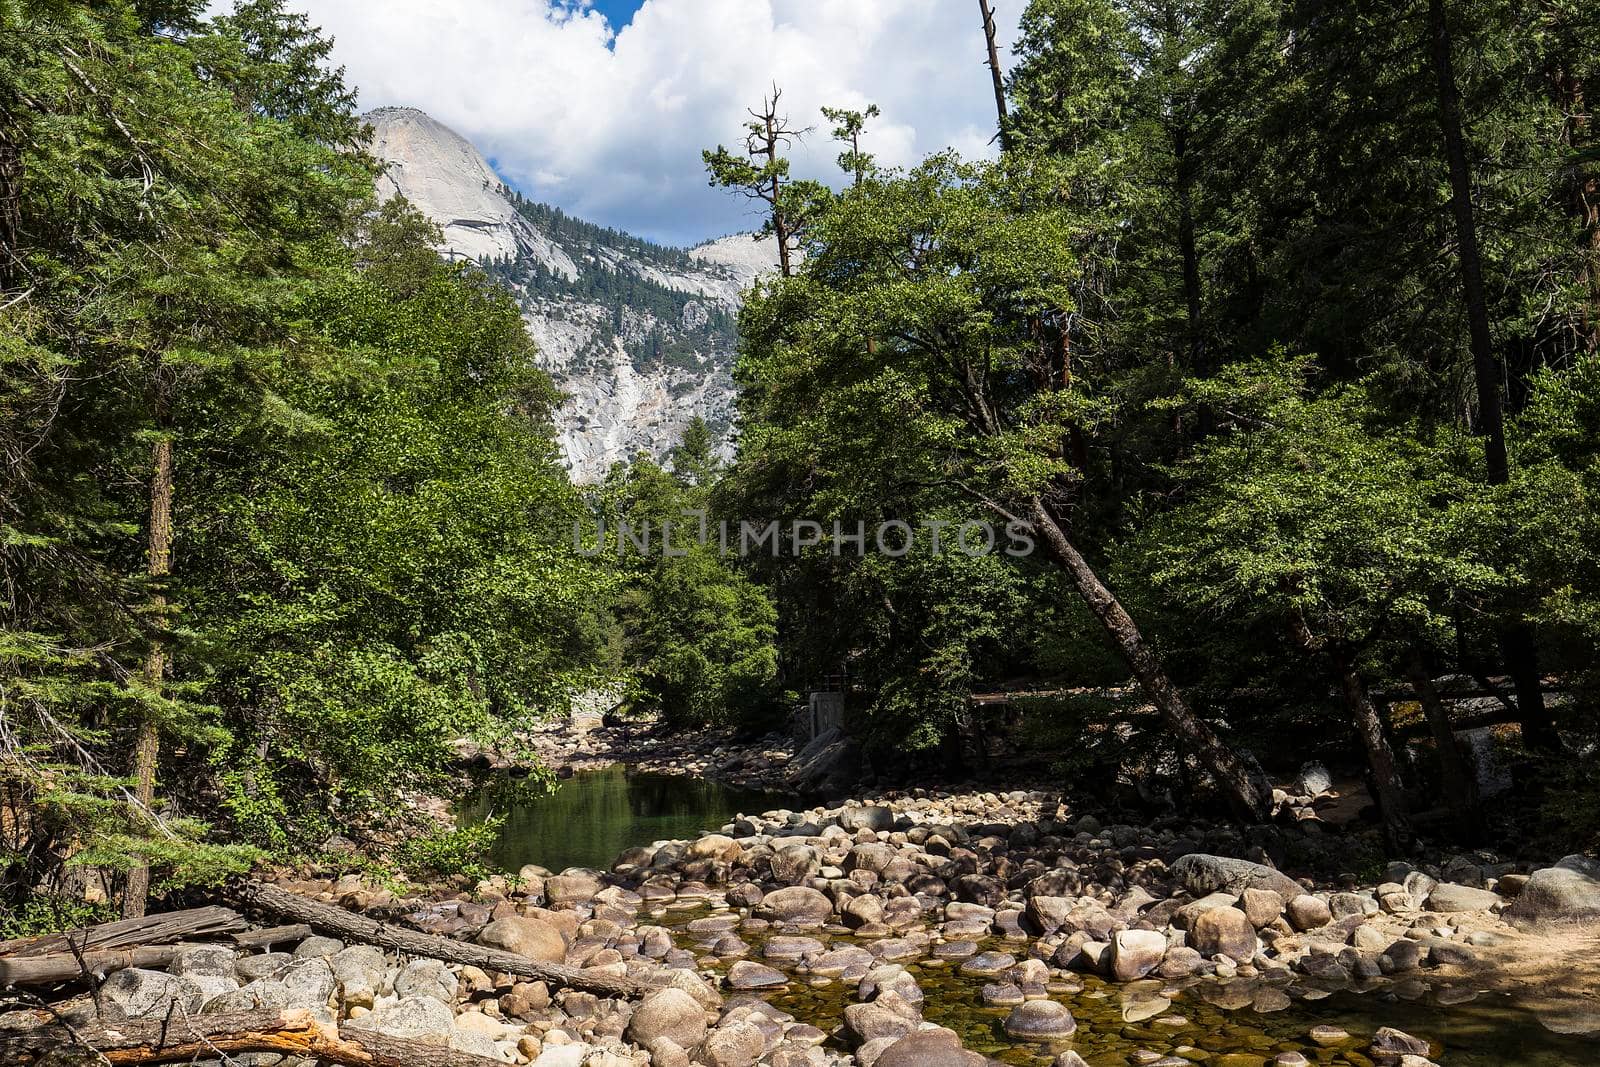 Yosemite valley, Yosemite national park by photogolfer